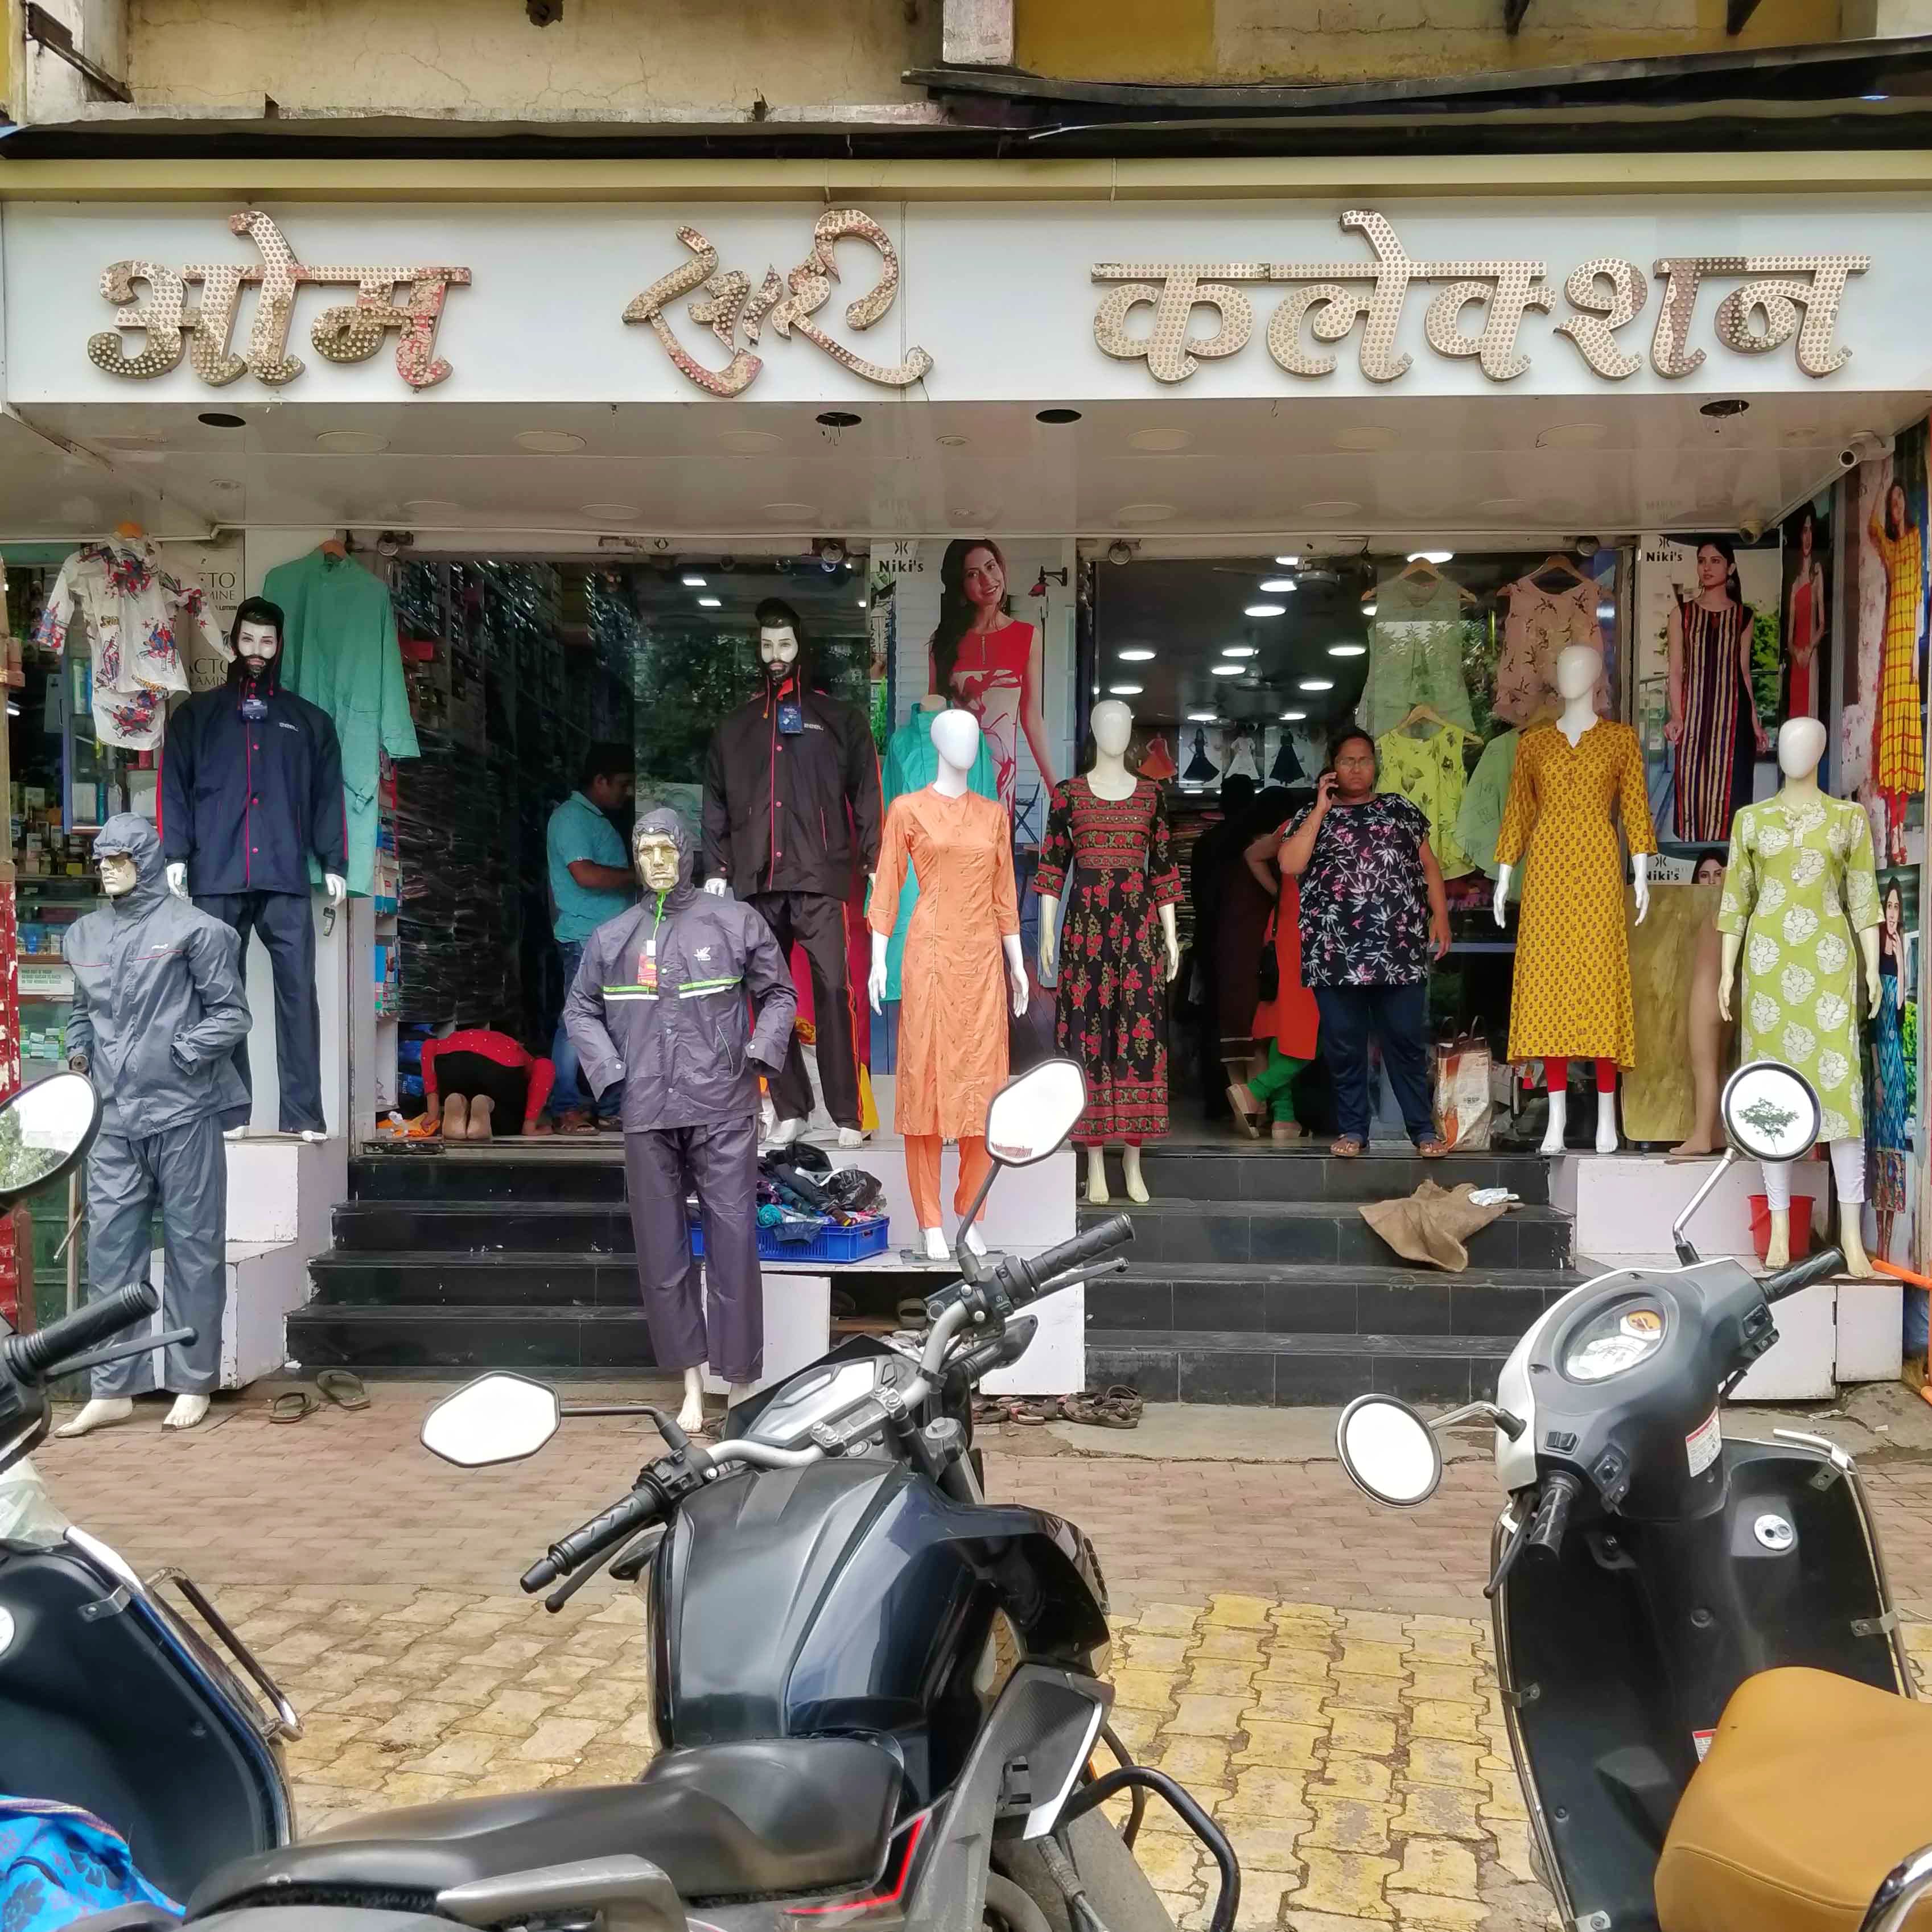 Scooter,Bazaar,Building,Market,Shopping,Vehicle,Street